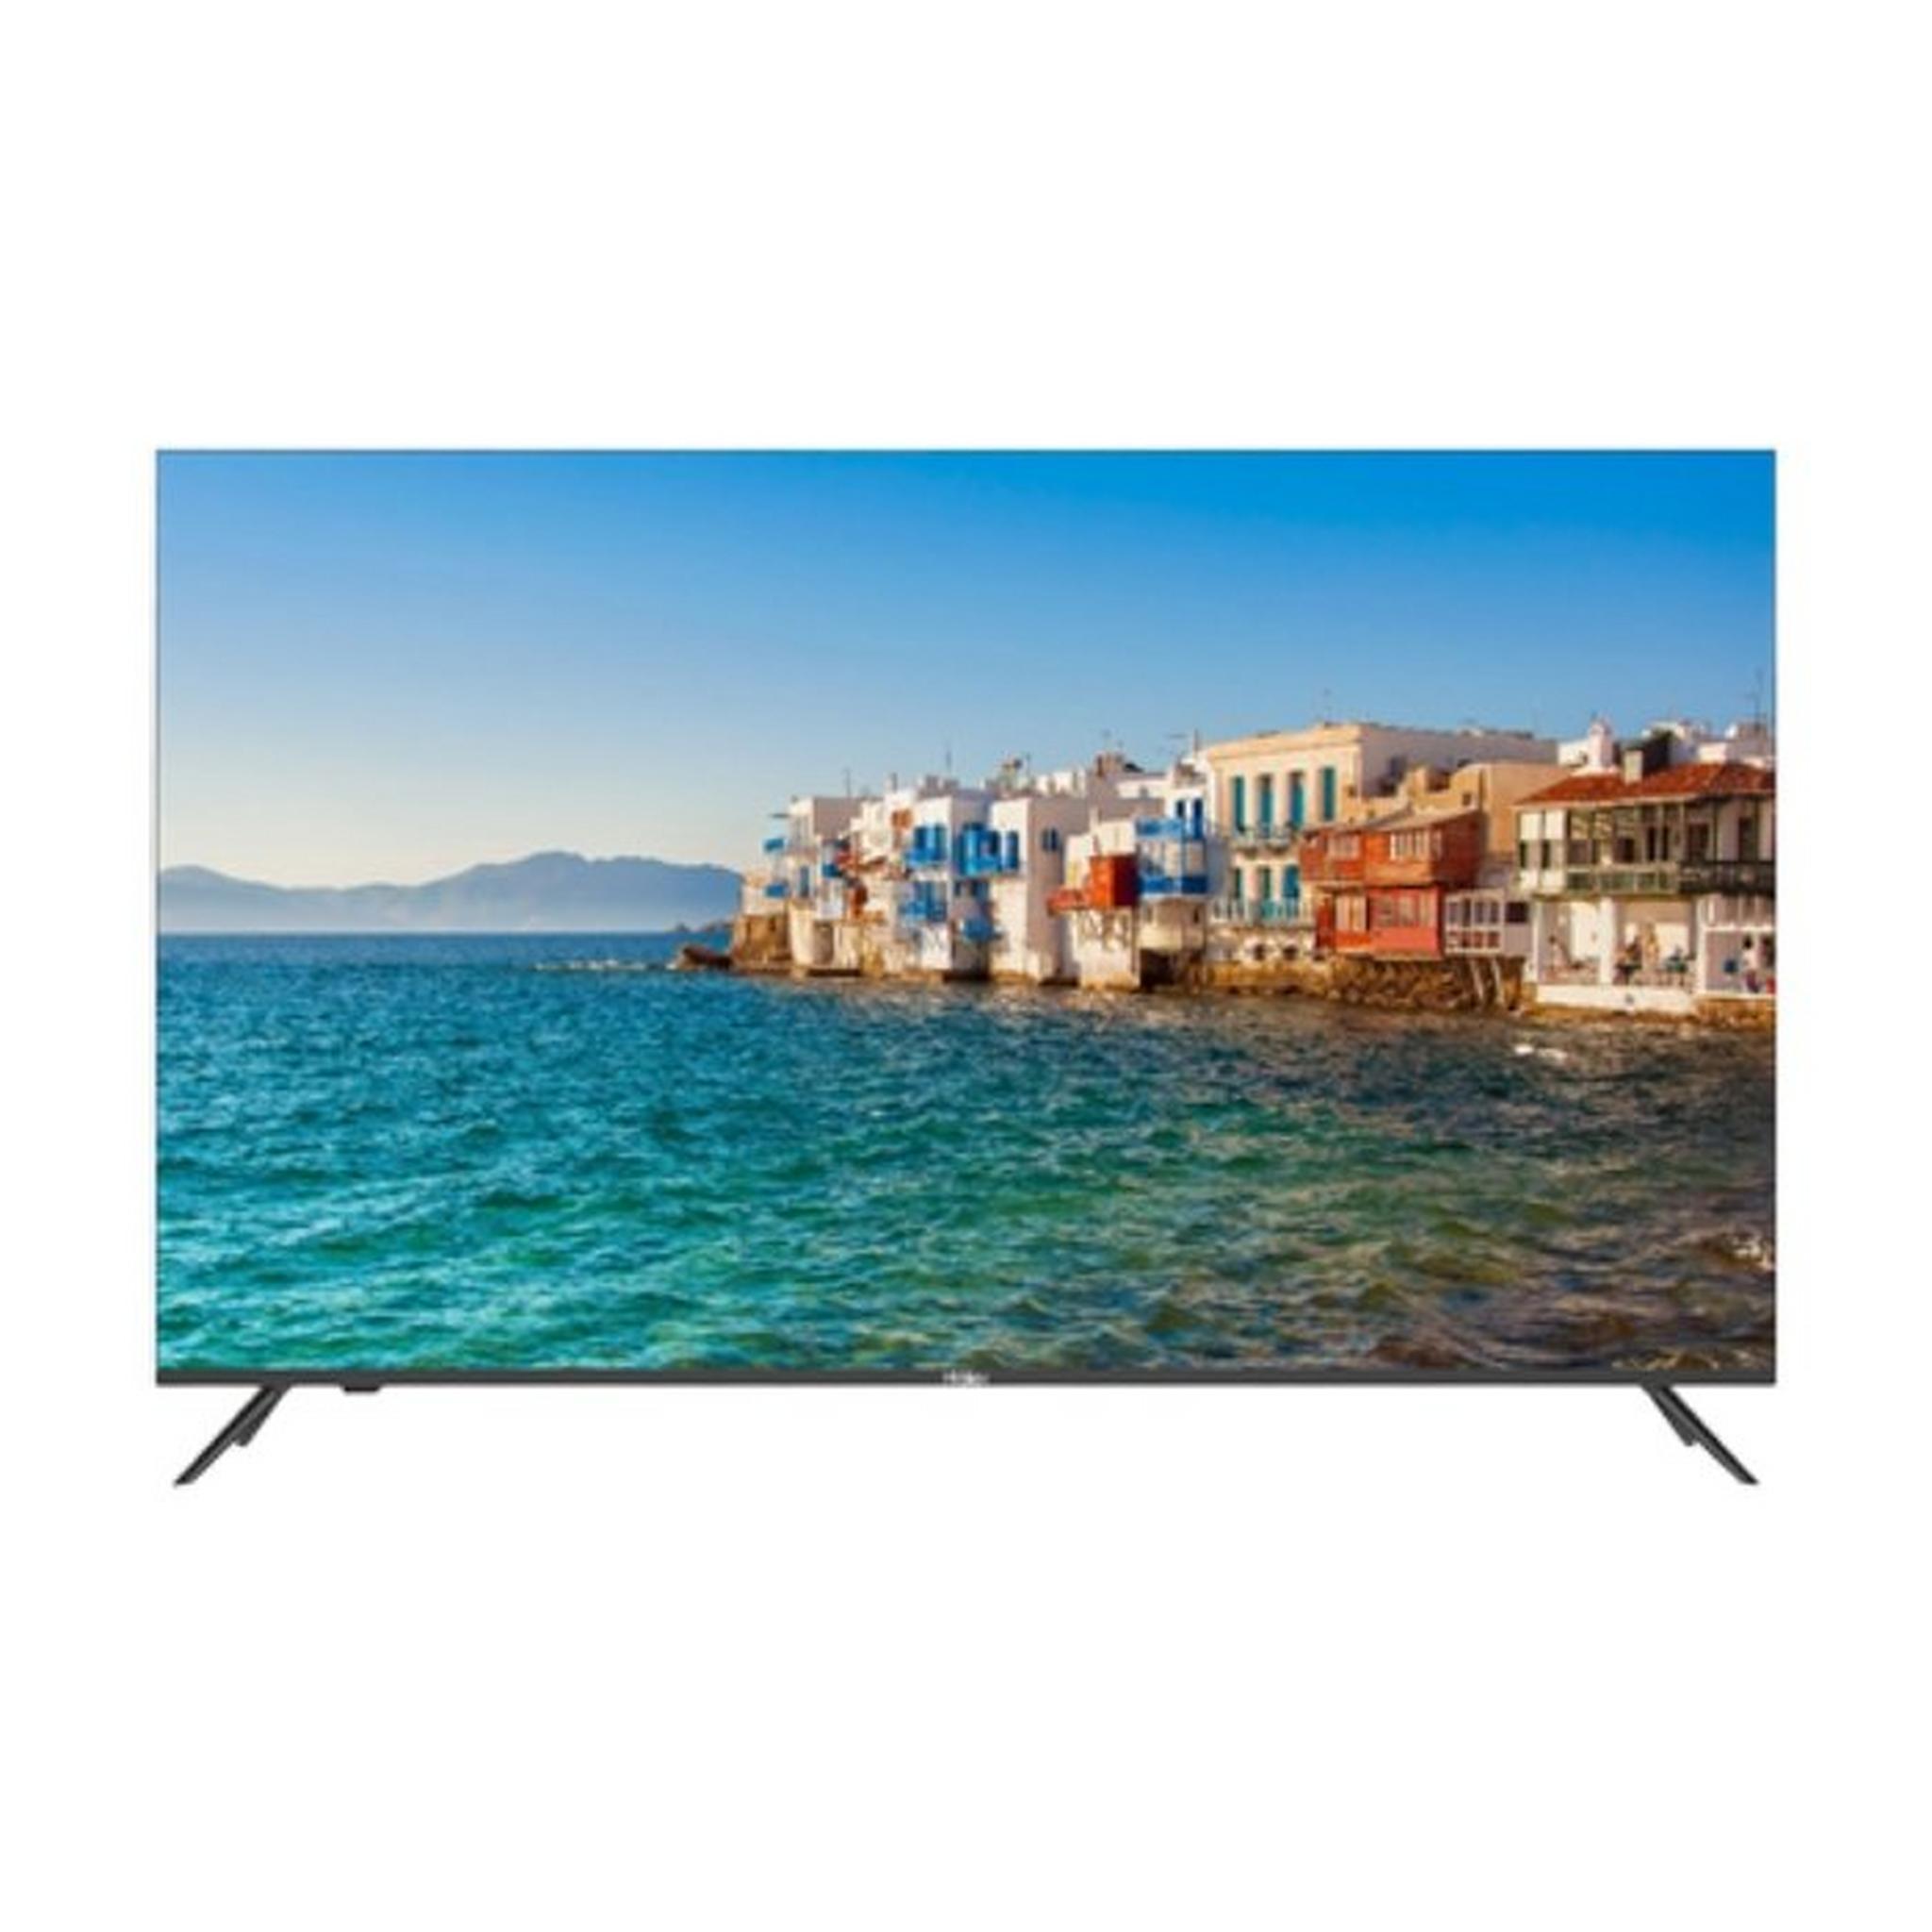 Haier TV 55-inch 4K Smart LED (LE55K6600UG)